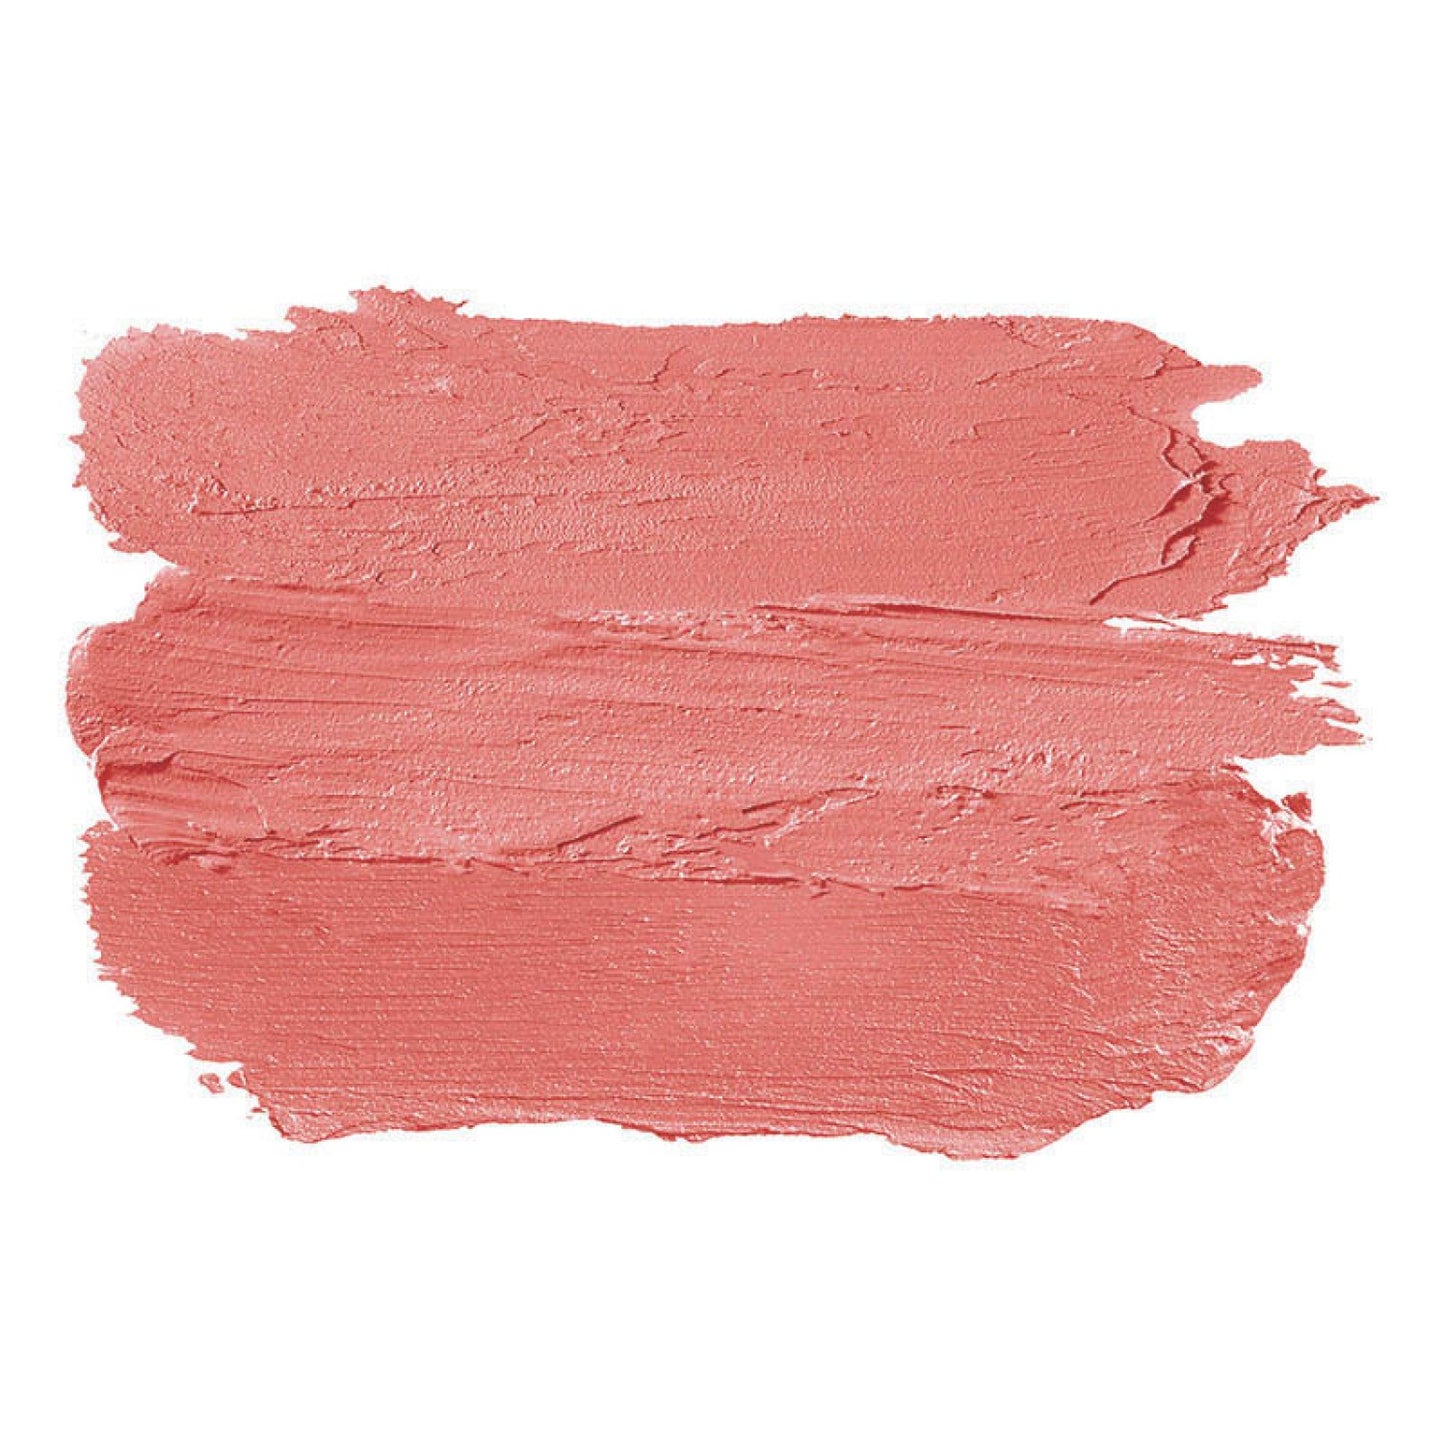 Love Earth Liquid Lipstick - Pink Lady